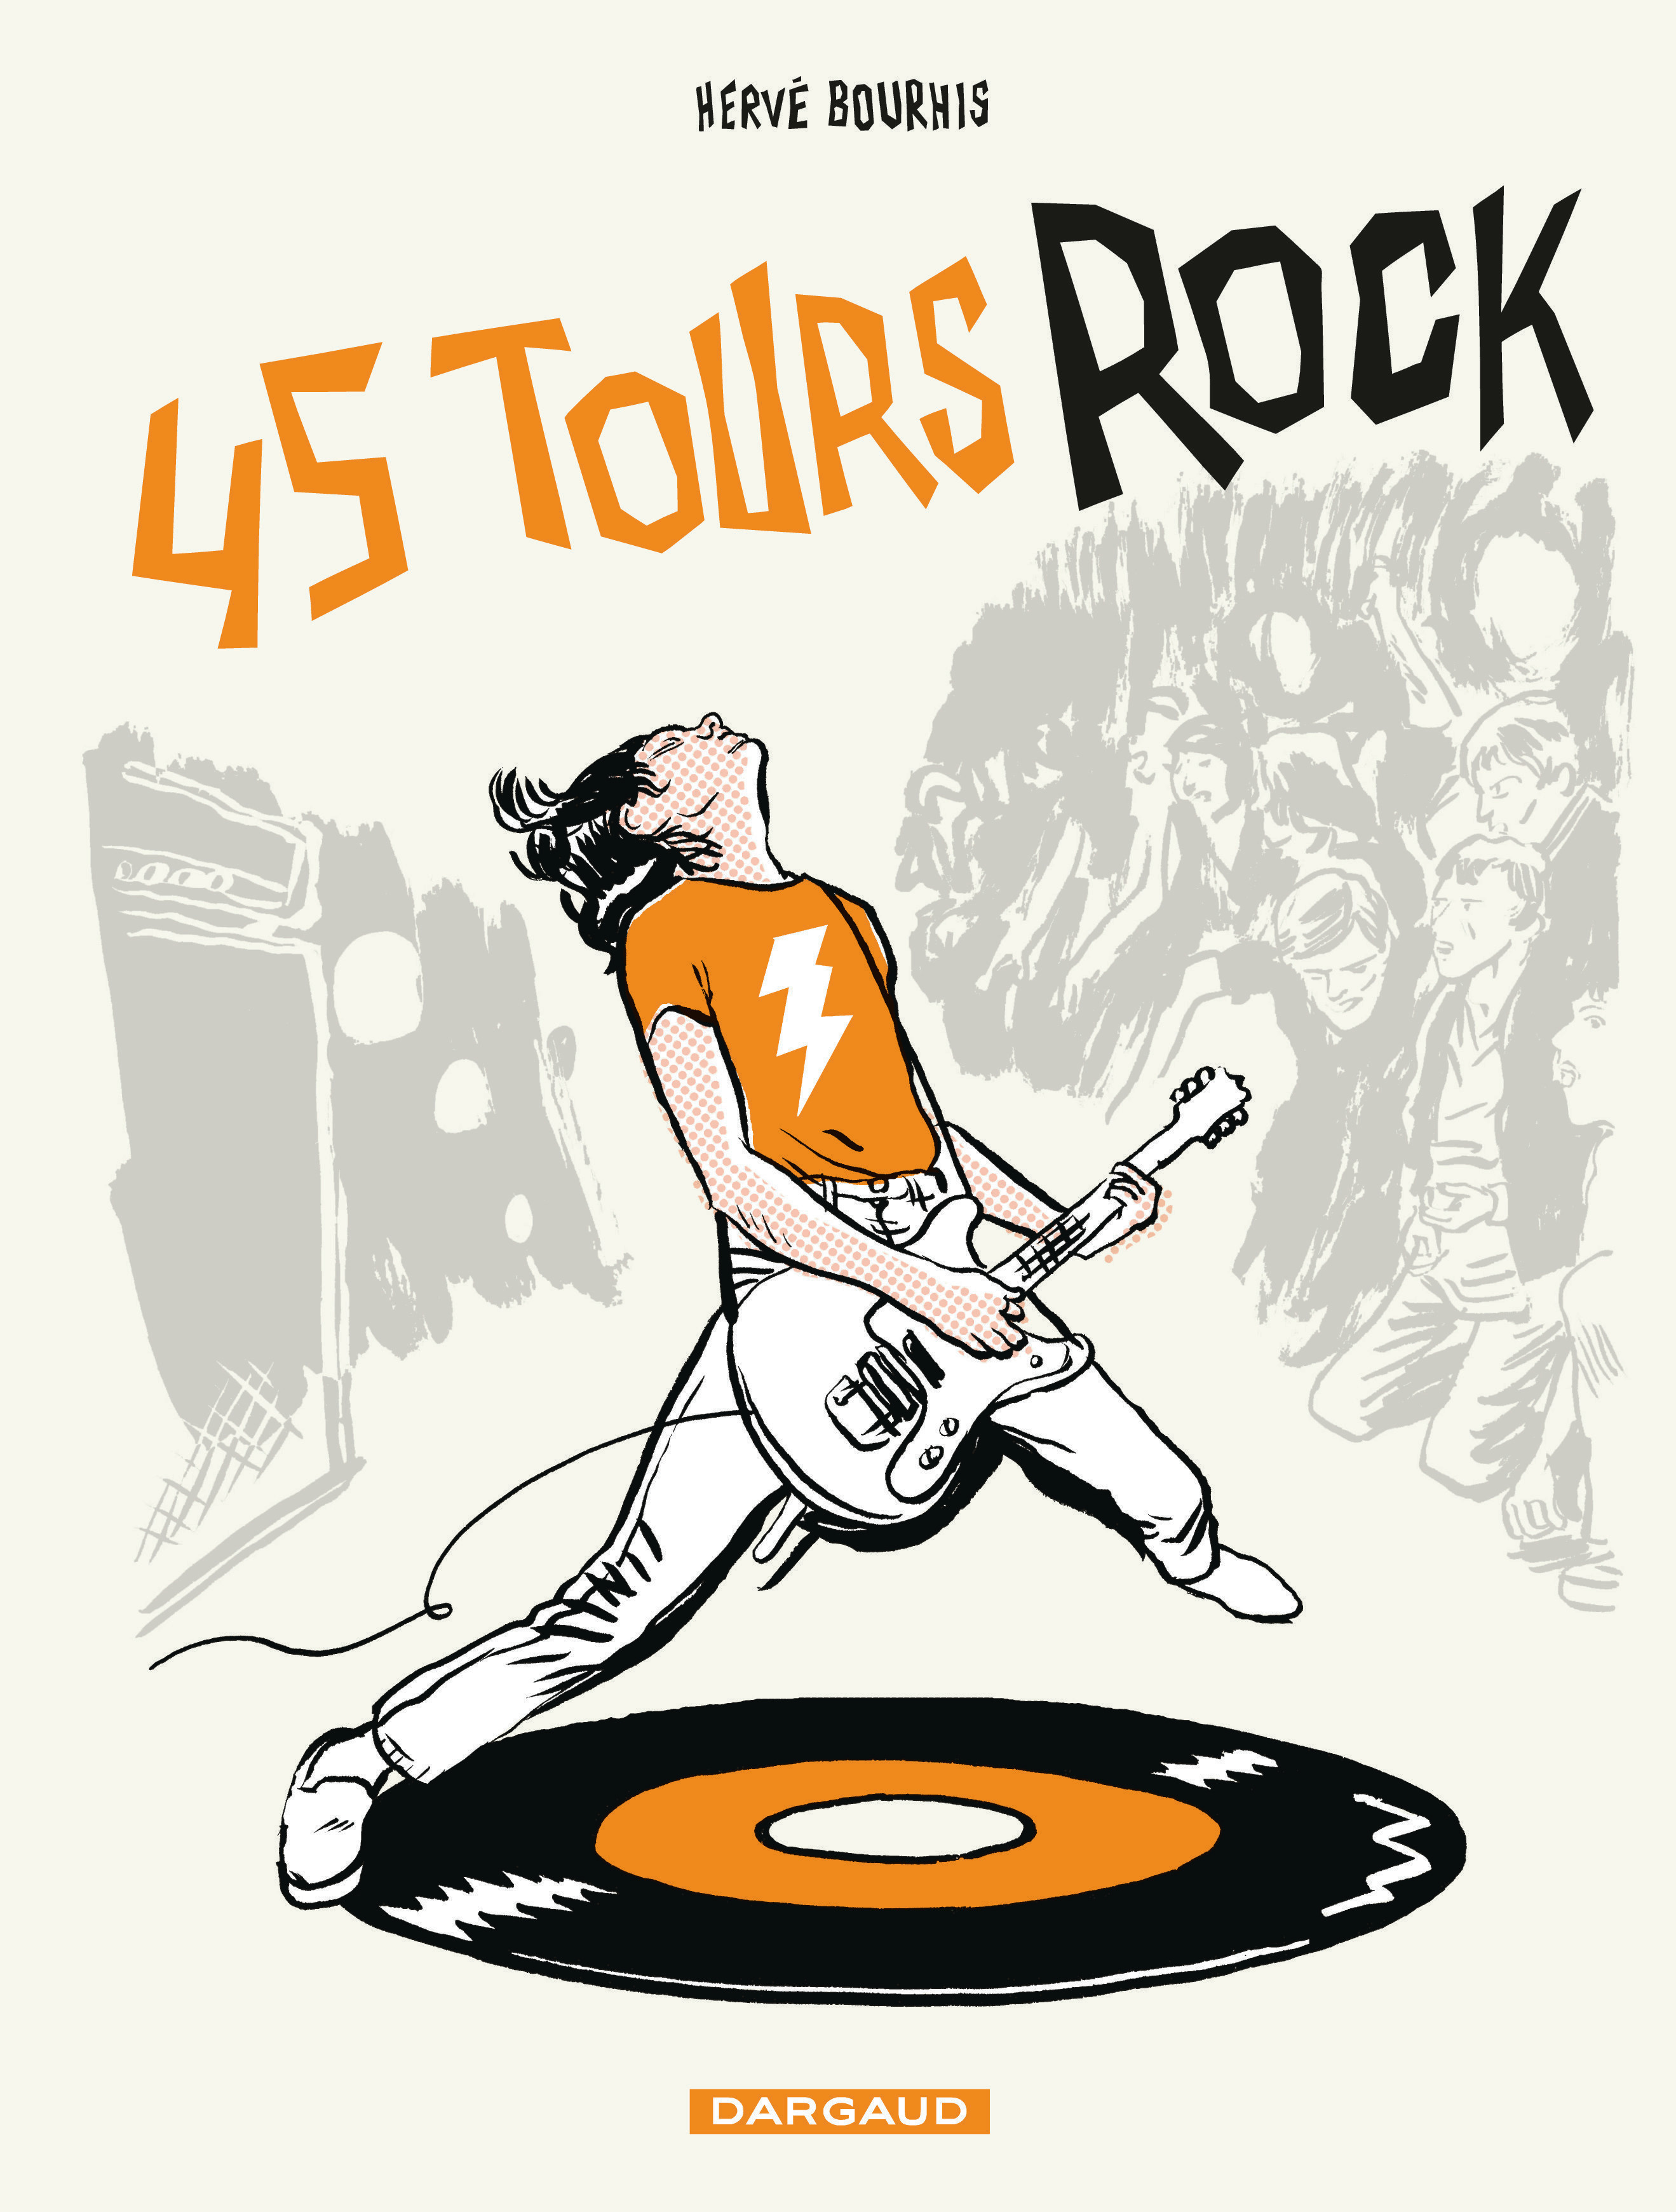 45 Tours Rock - Tome 0 - 45 Tours Rock